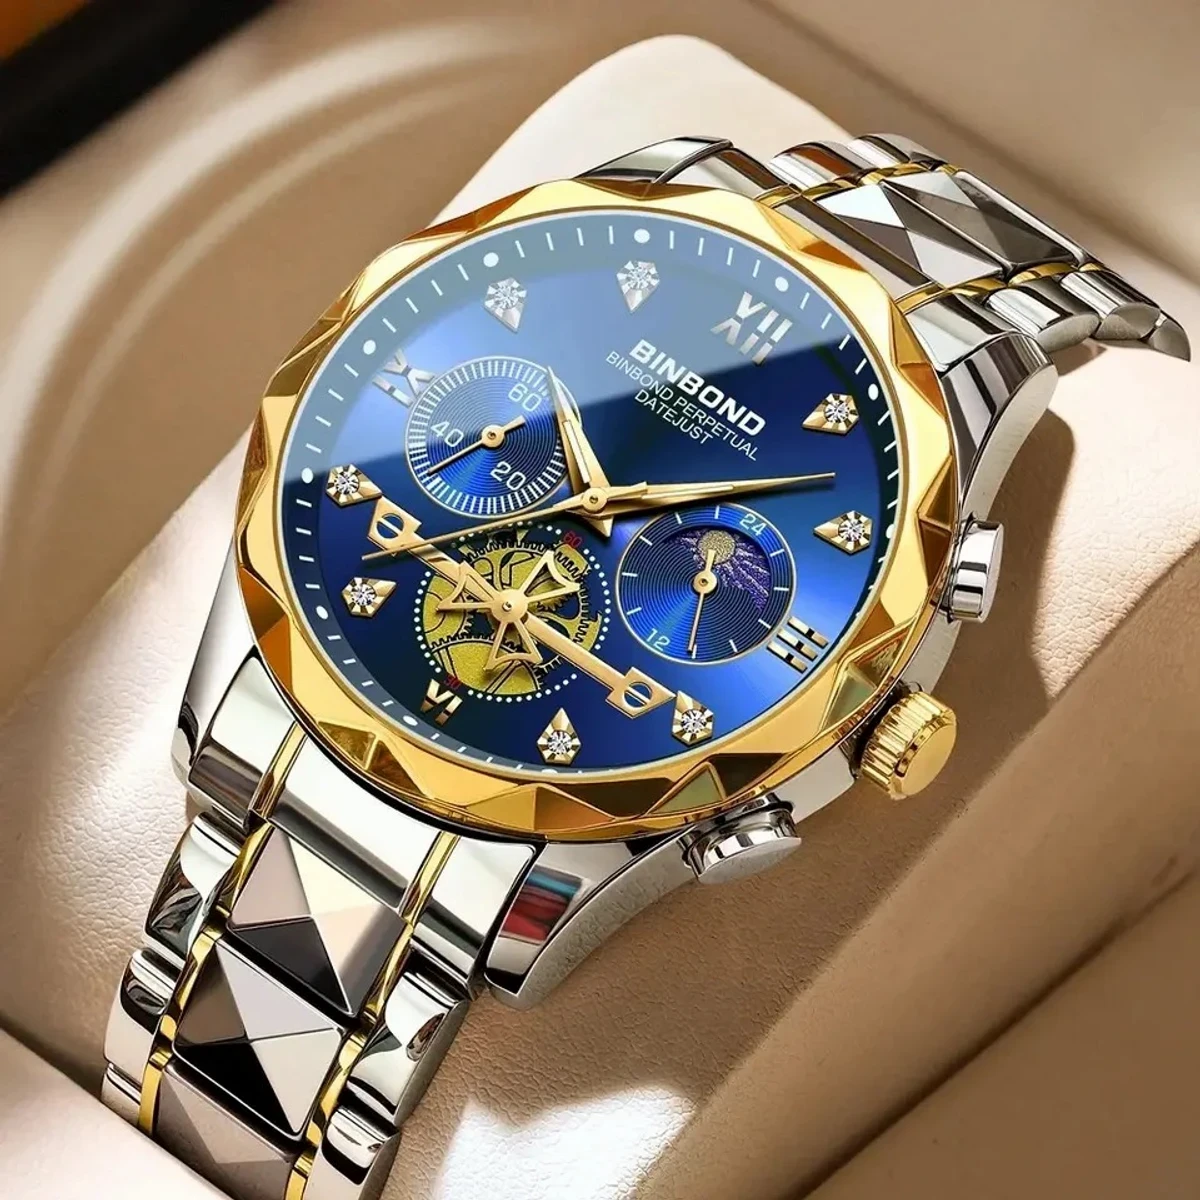 New Luxury Diamond Watch For Men Stainless Steel Waterproof Chronograph Luminous Date Business Sport Wristwatches- Blue